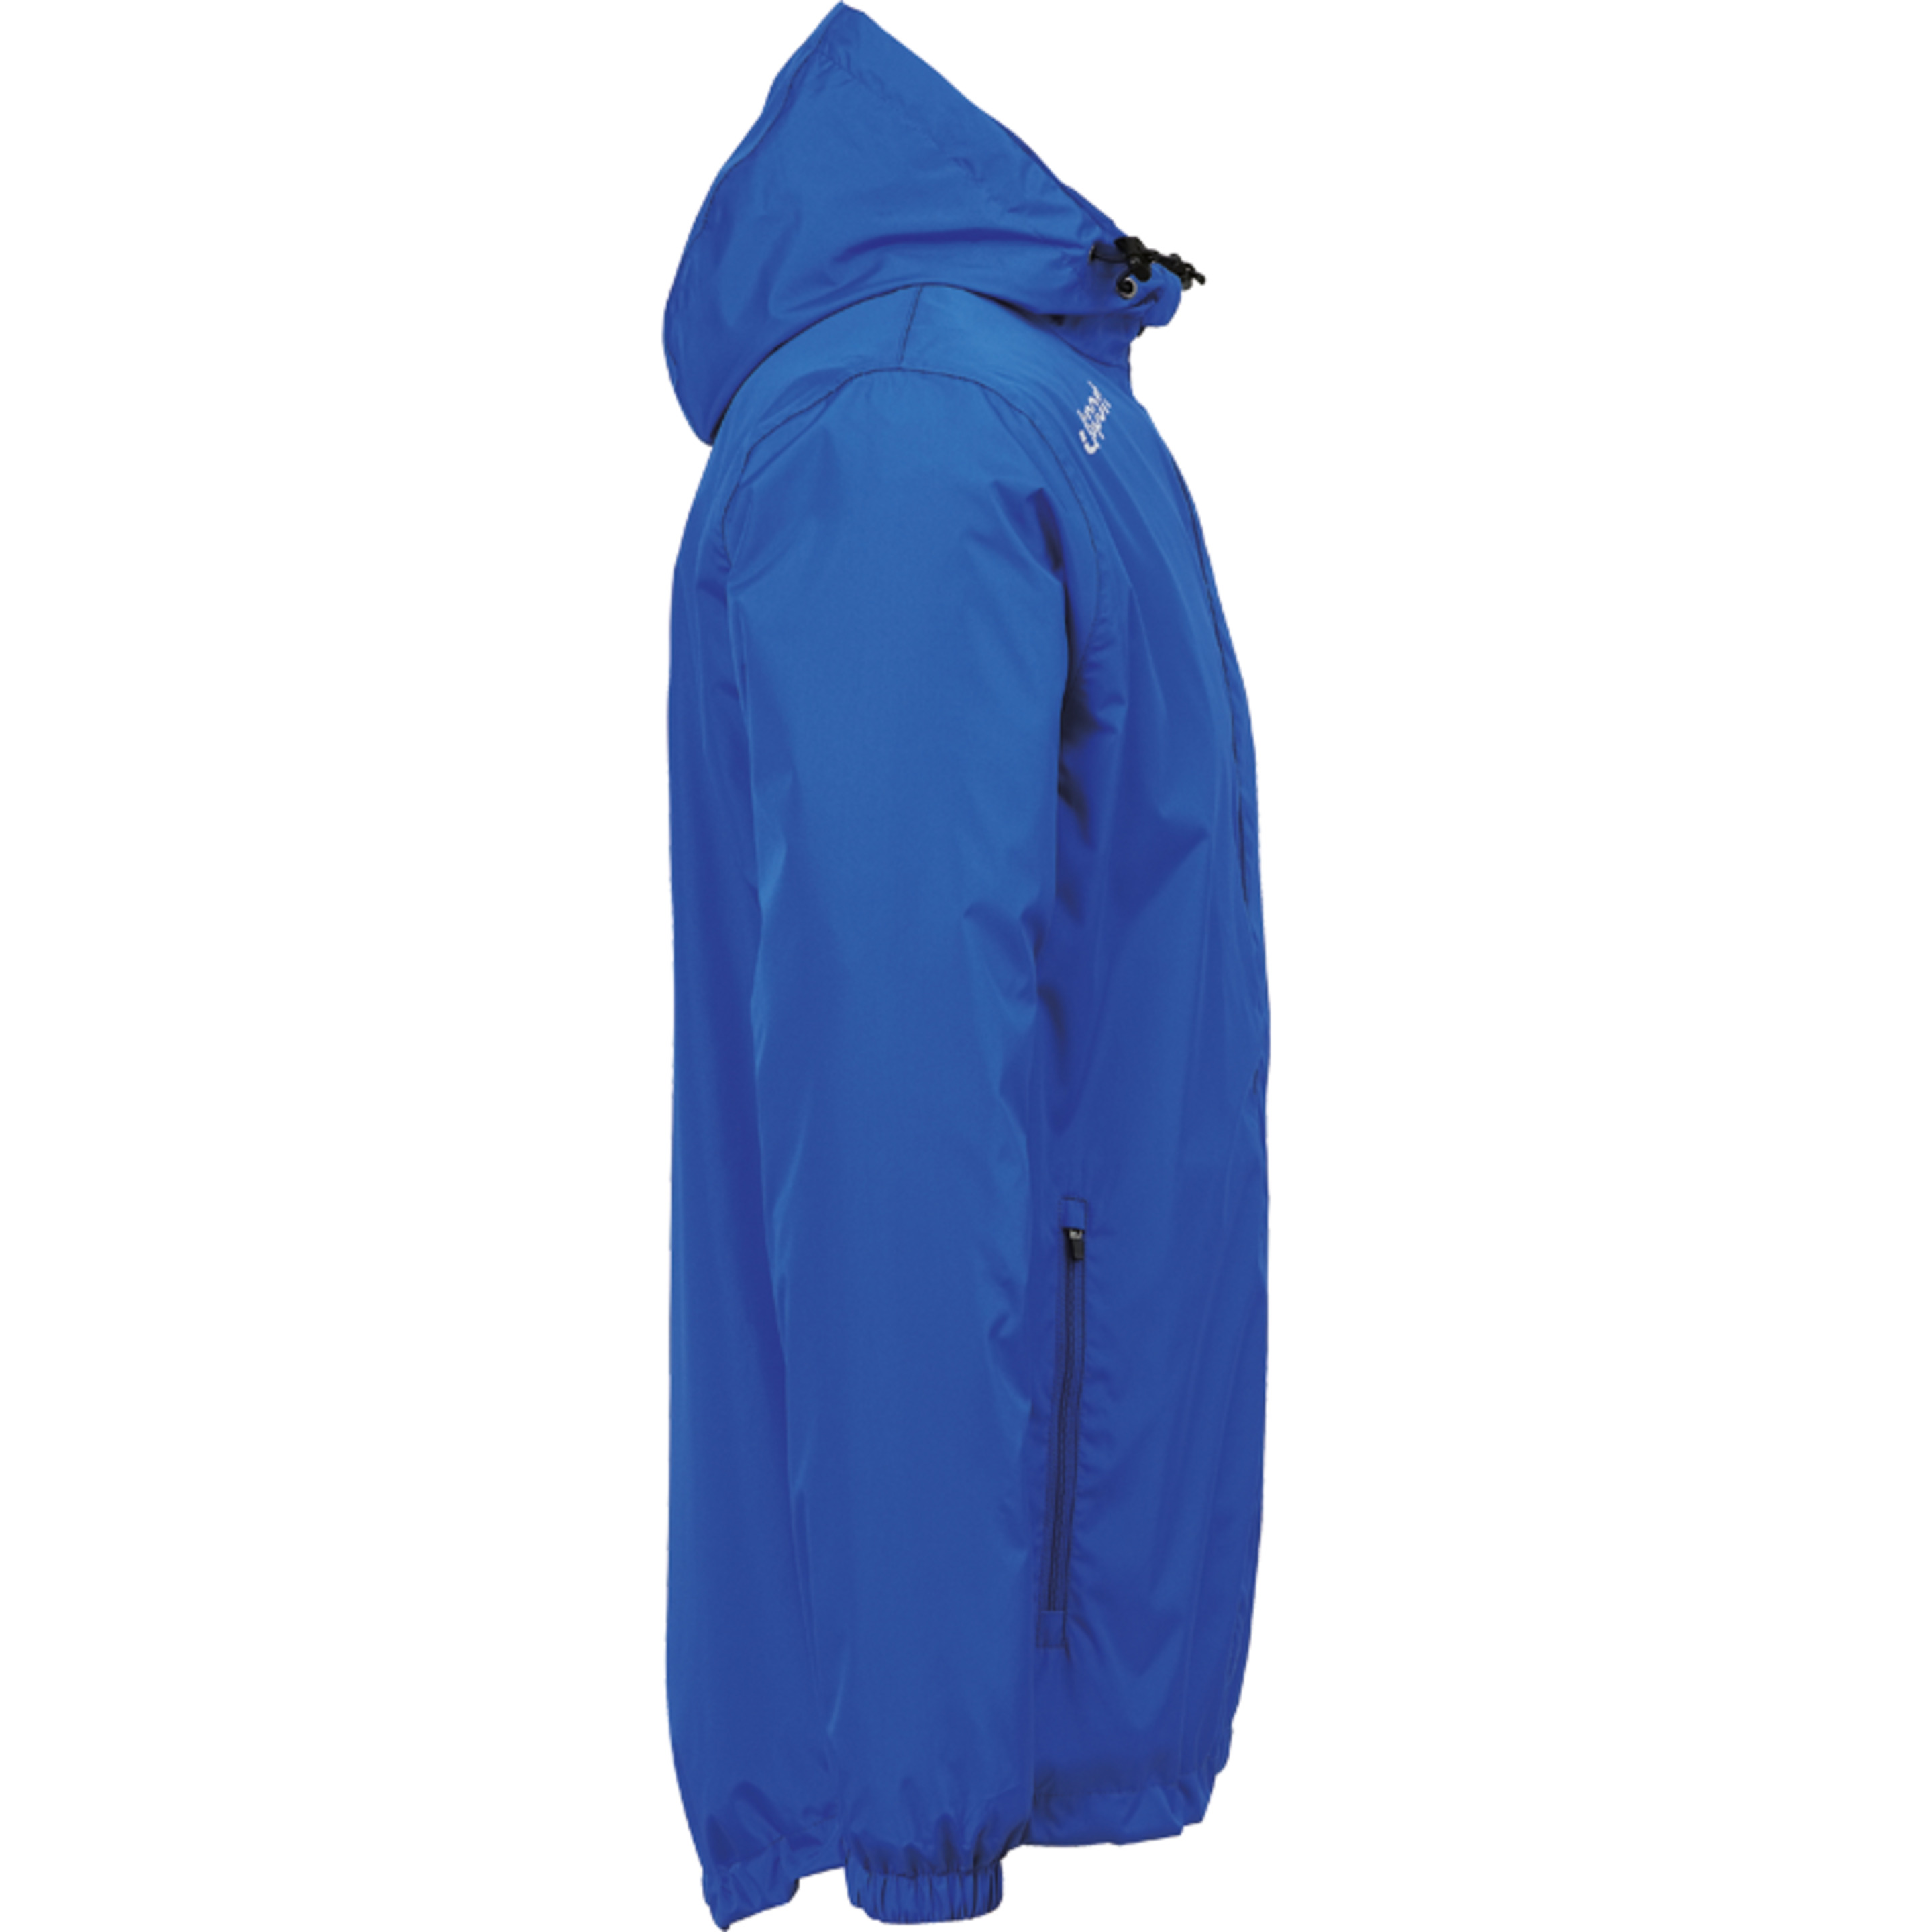 Essential Rain Jacket Azur/blanco Uhlsport